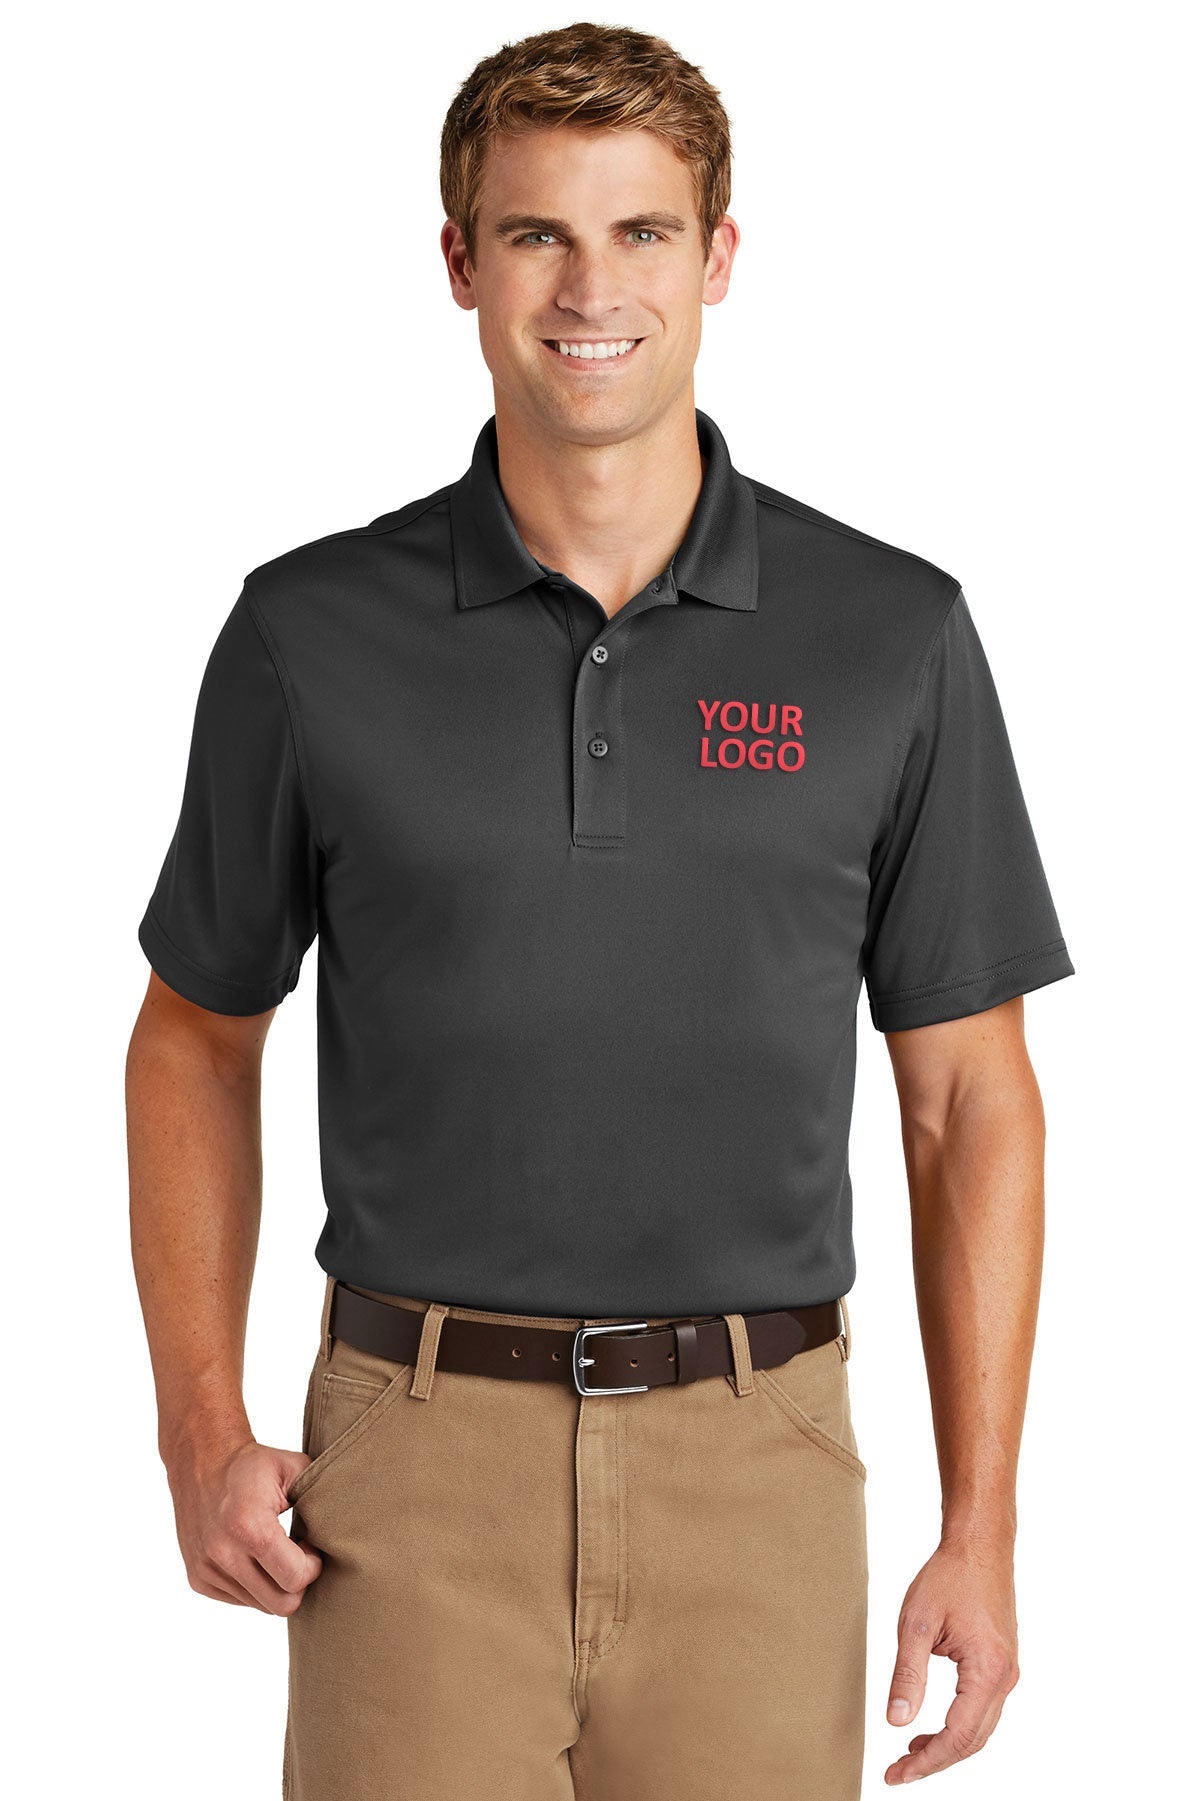 CornerStone Charcoal TLCS412 custom team polo shirts